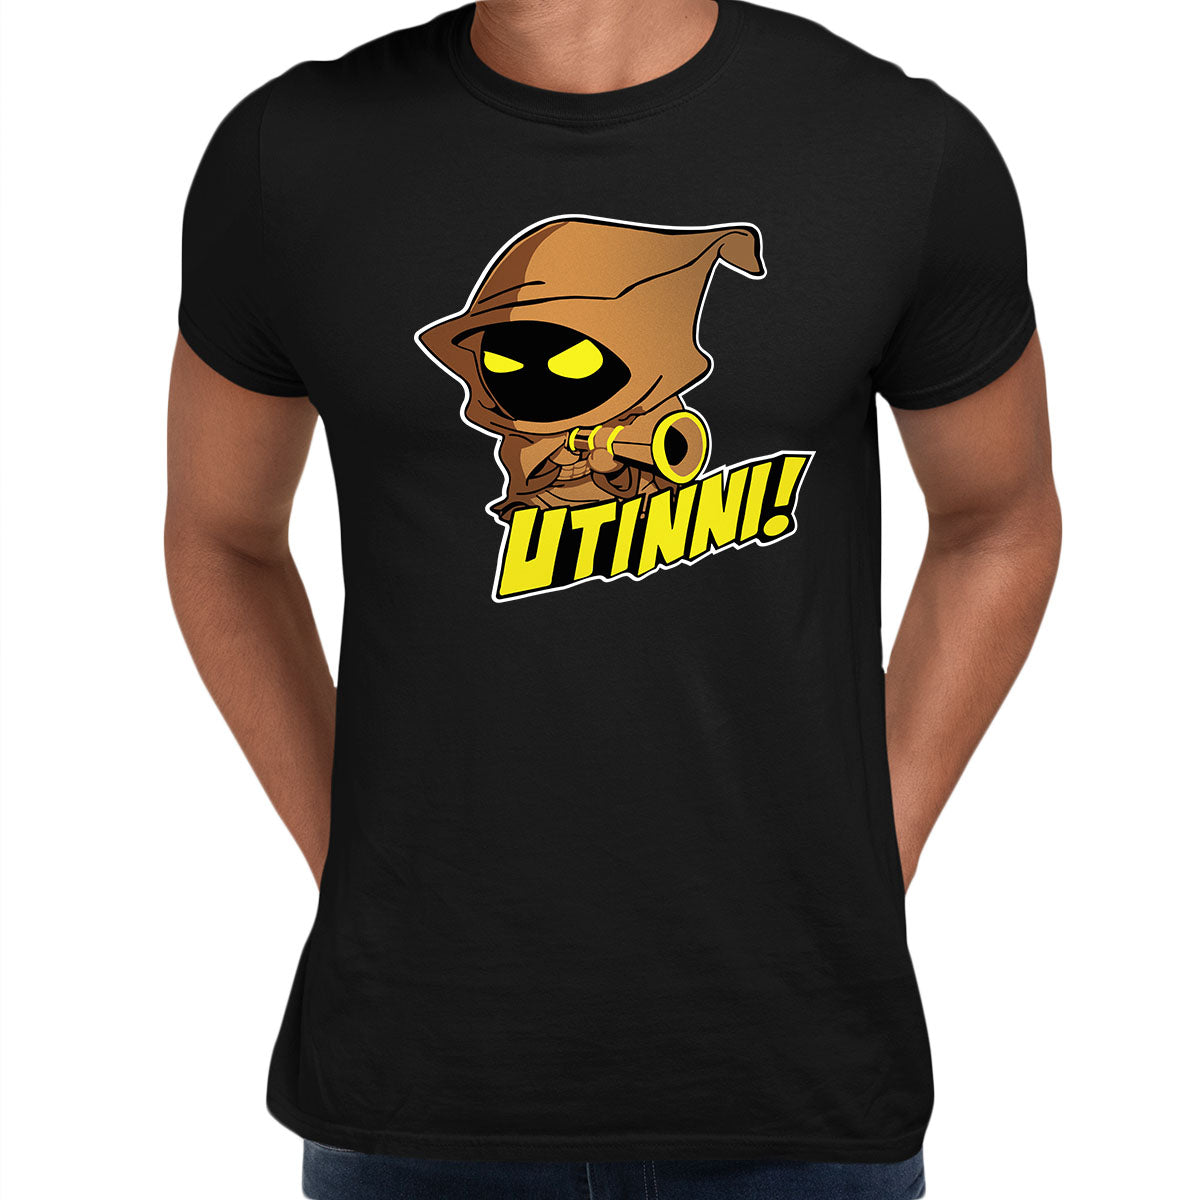 Utinni! Jawas t-shirt - Jawa Friends Momento - Tatooine Adventurer Unisex T-Shirt - Kuzi Tees